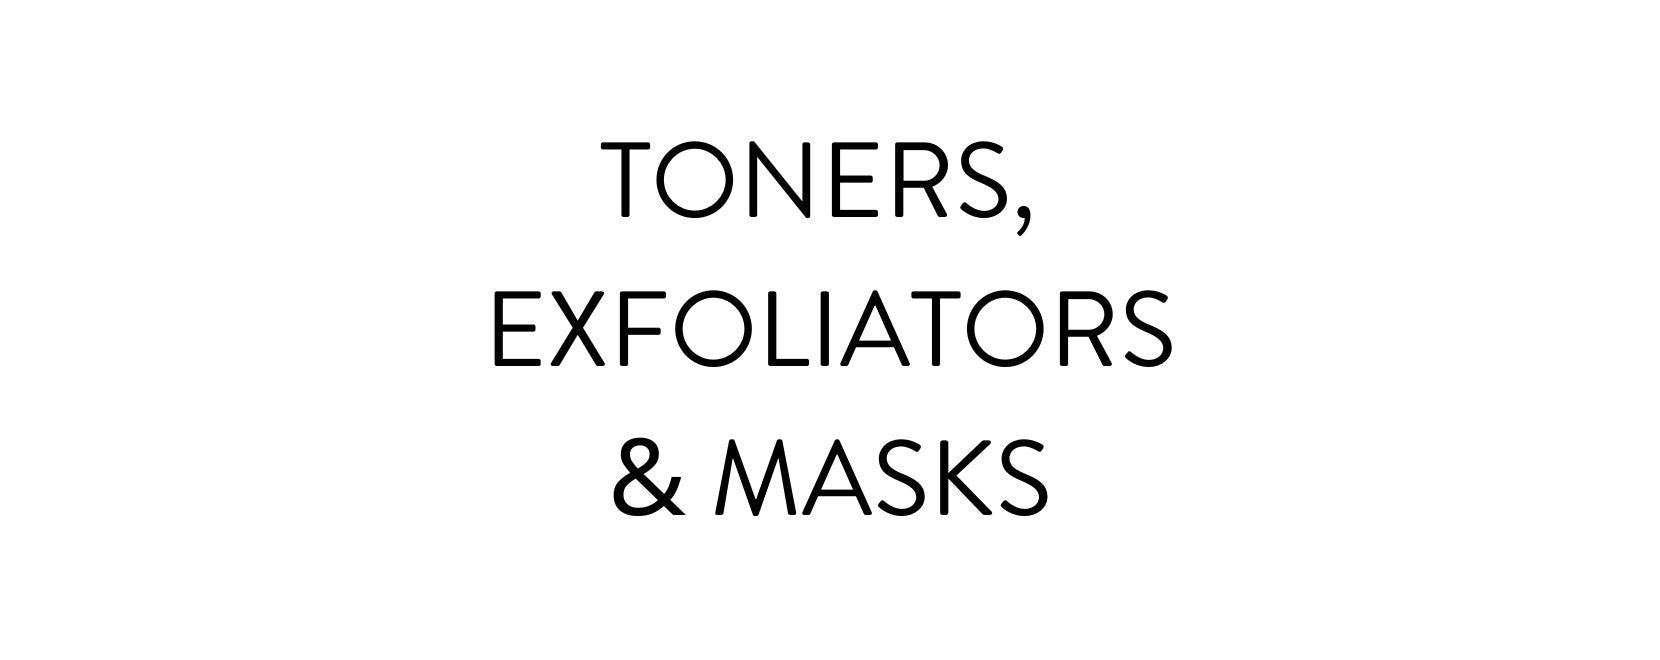 Toners, Exfoliators & Masks